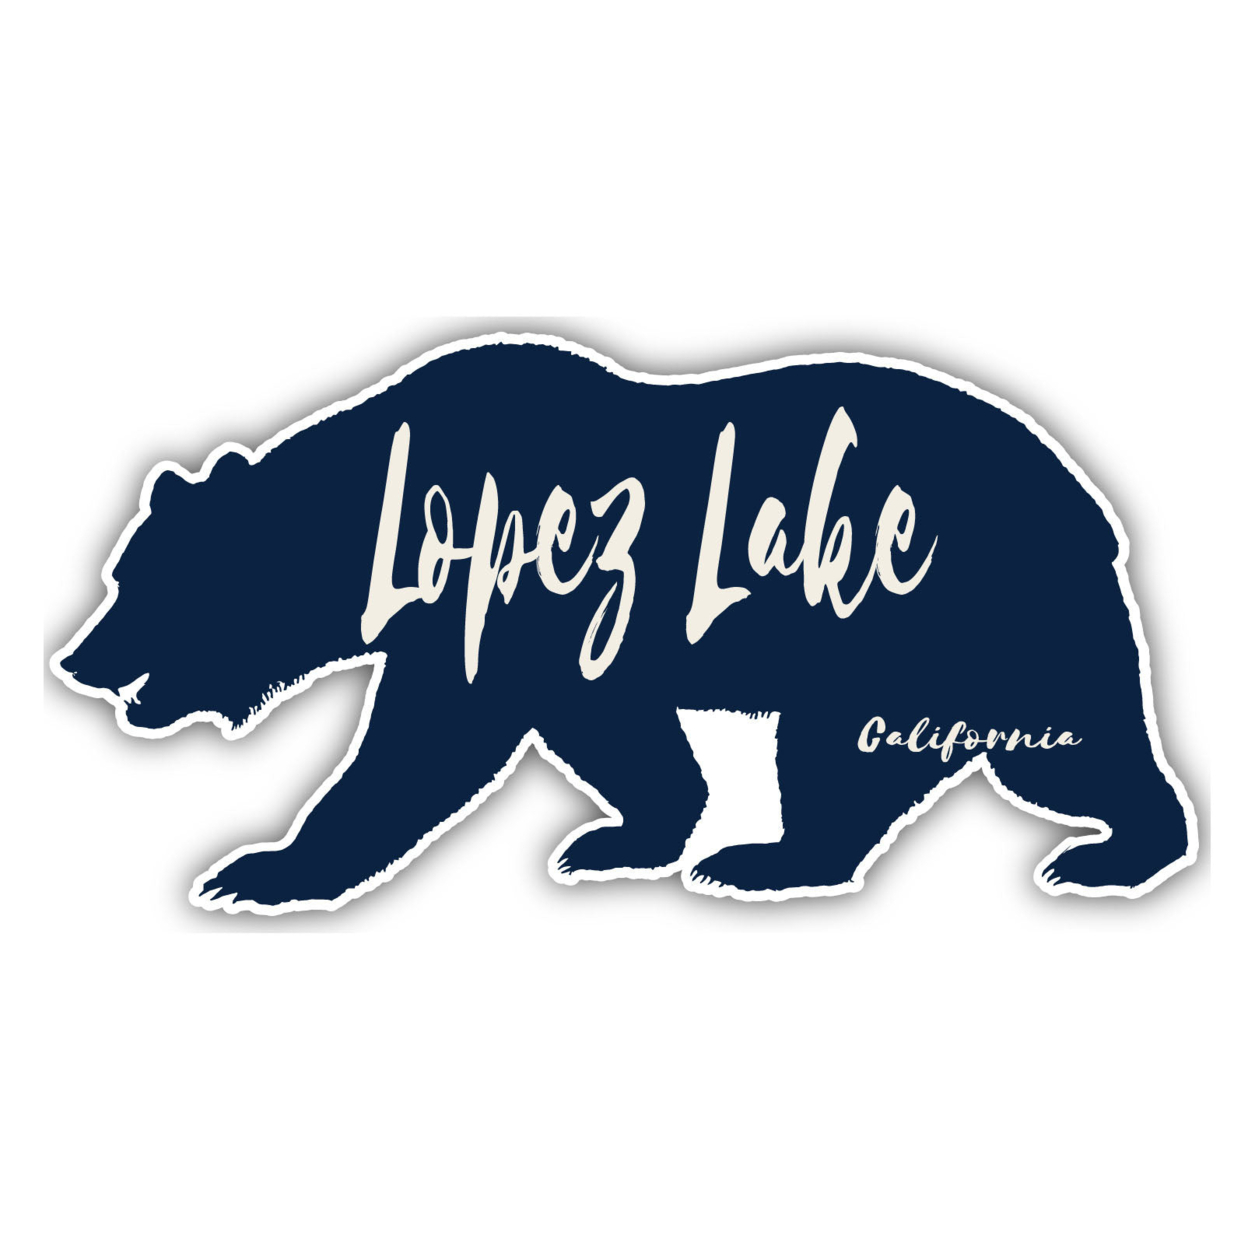 Lopez Lake California Souvenir Decorative Stickers (Choose Theme And Size) - 4-Inch, Adventures Awaits